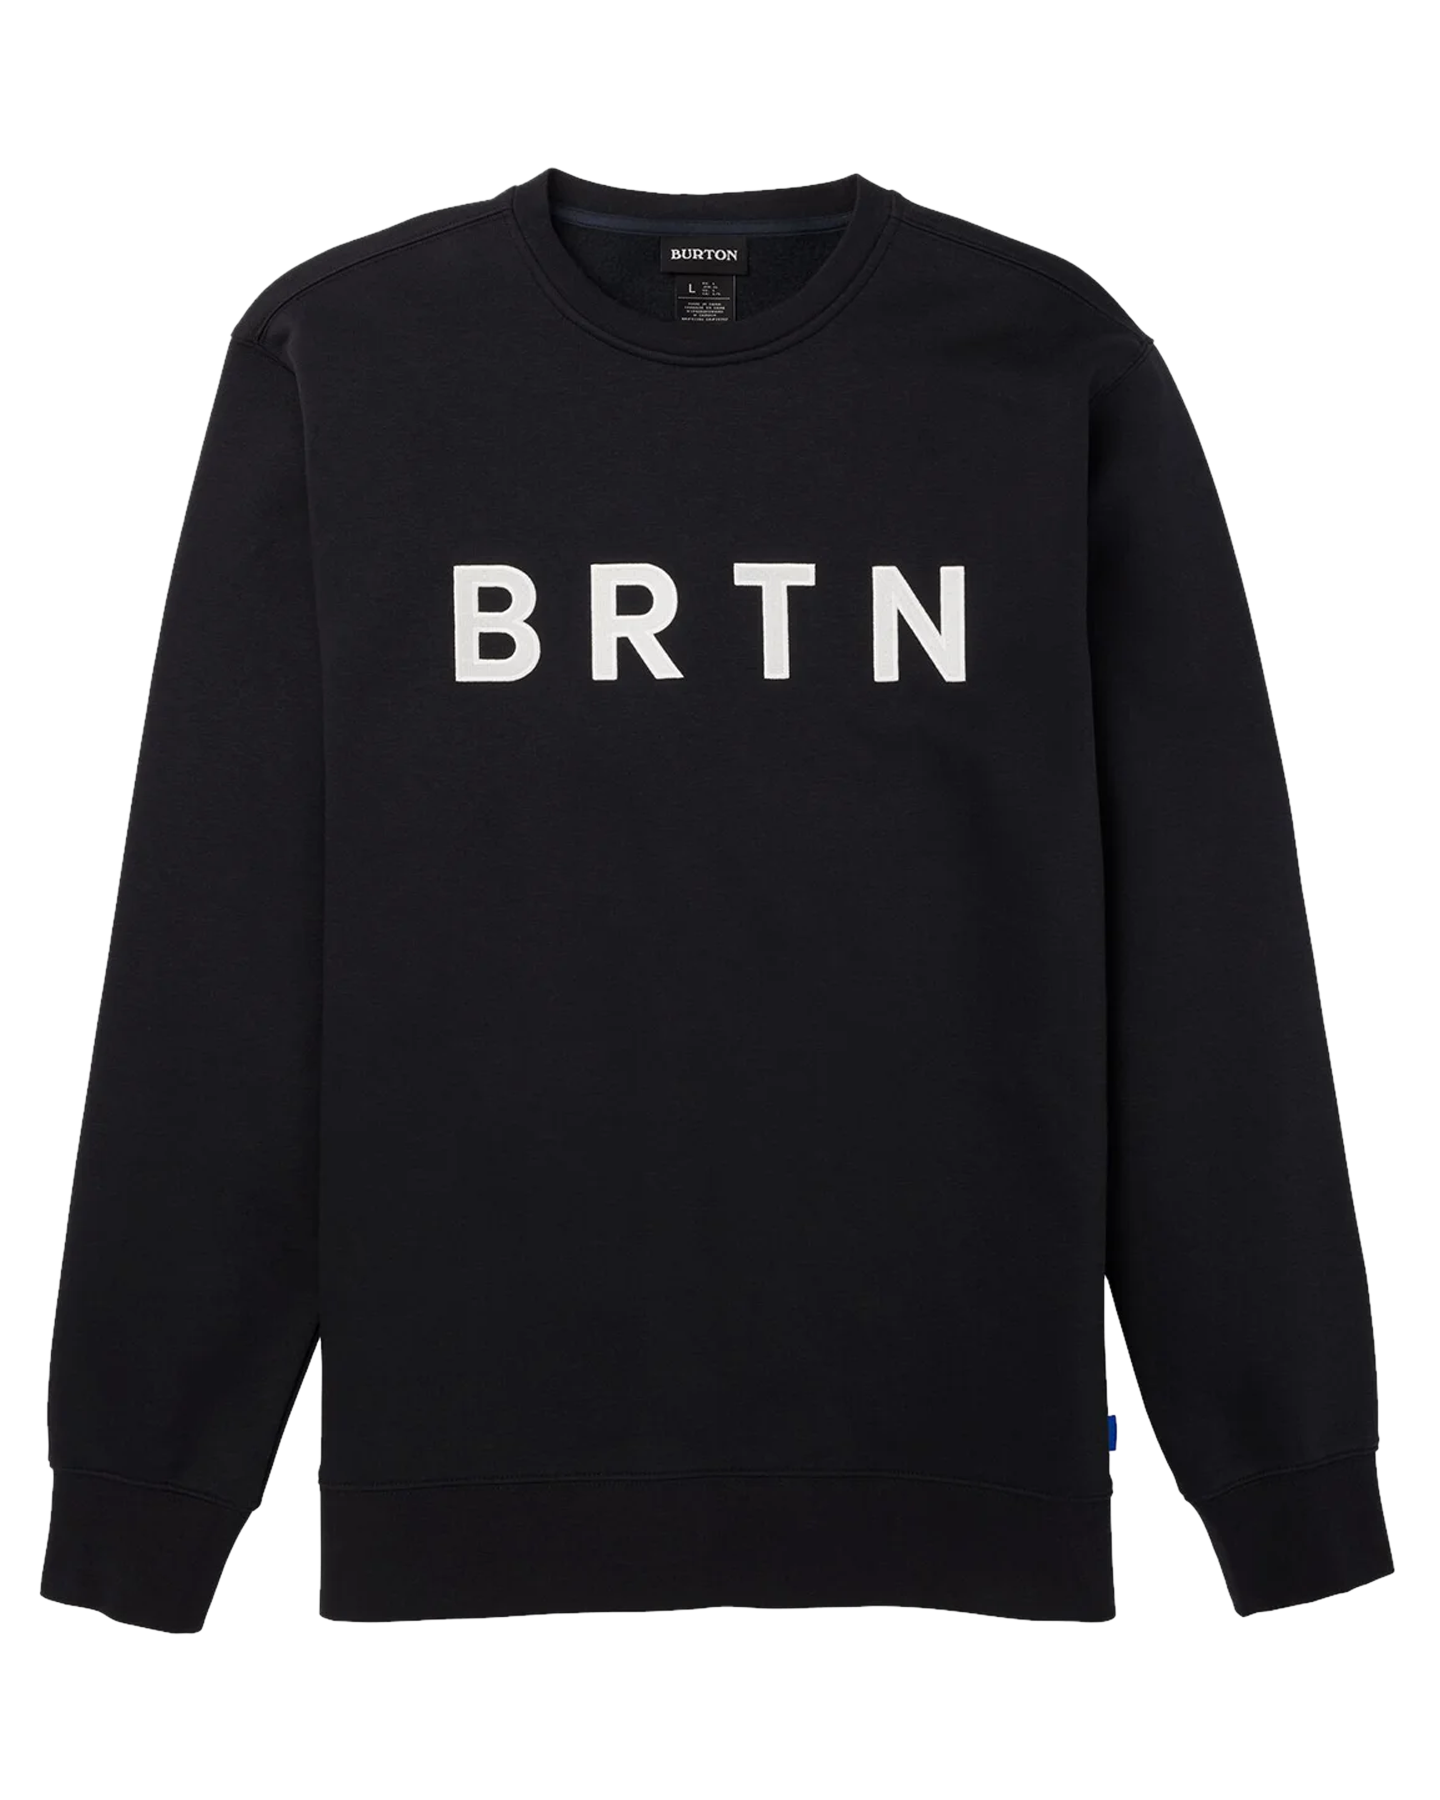 Burton BRTN Crew Sweatshirt - True Black - 2021 Hoodies & Sweatshirts - SnowSkiersWarehouse